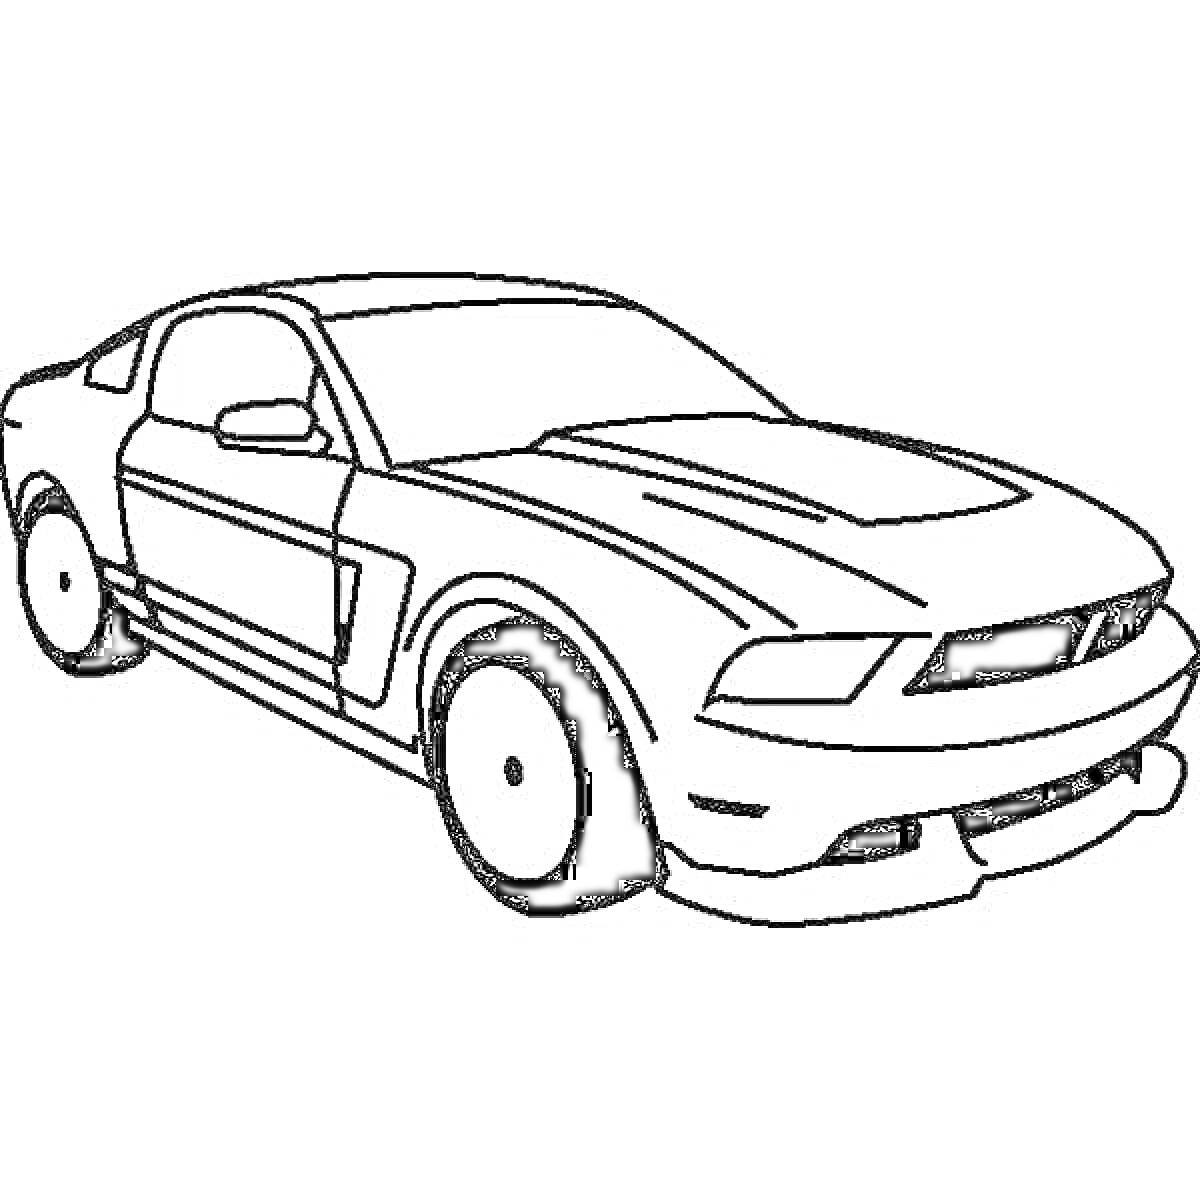 Раскраска Раскраска машины Ford Mustang с деталями кузова, колес, фар, капота и дверей